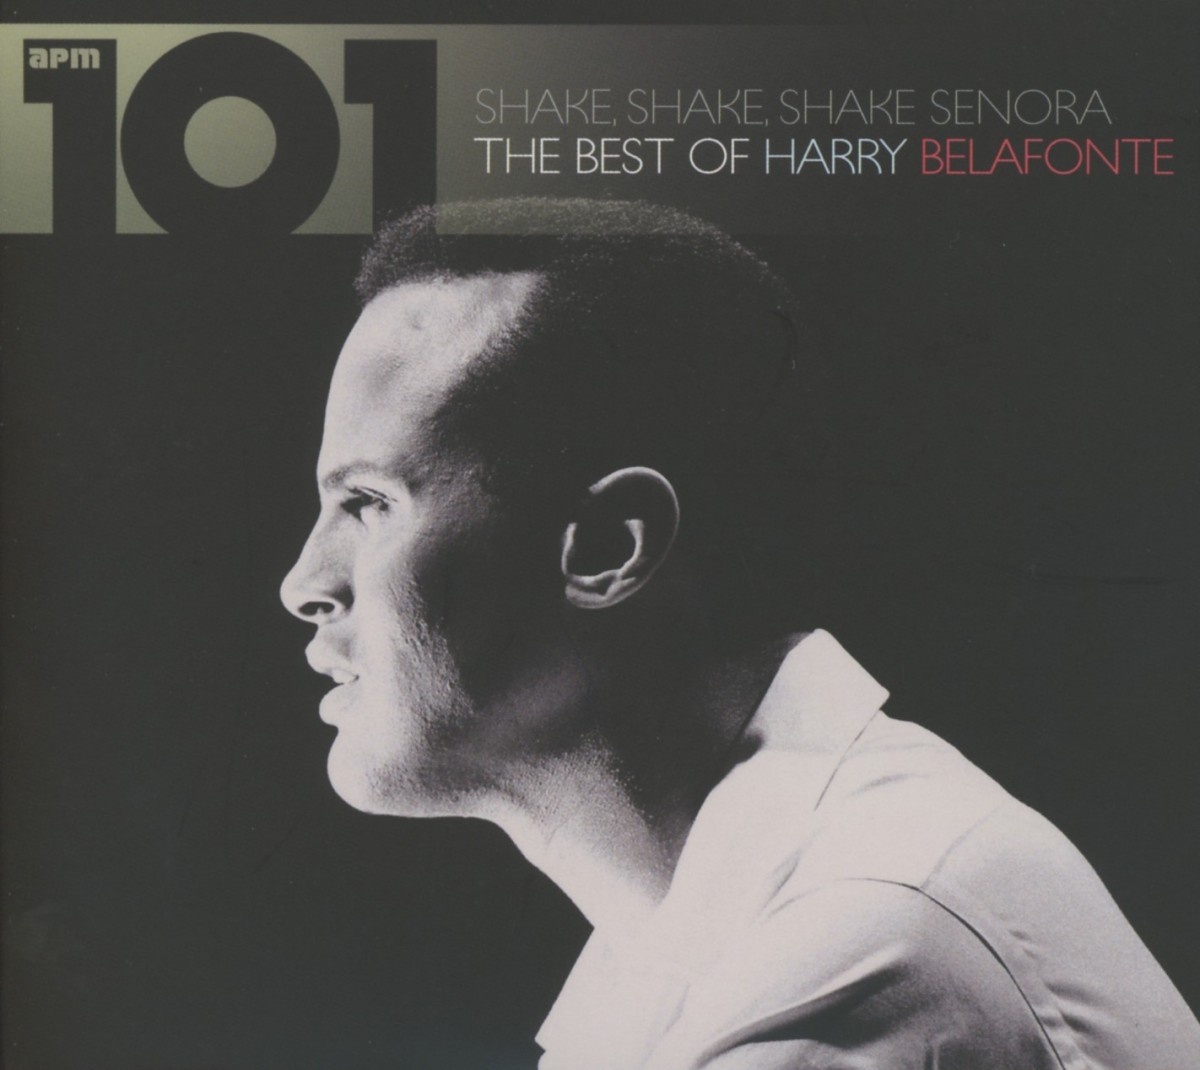 Shake  shake  shake senora - The Best of Harry Belafonte  4 CDs - Harry Belafonte. (CD)